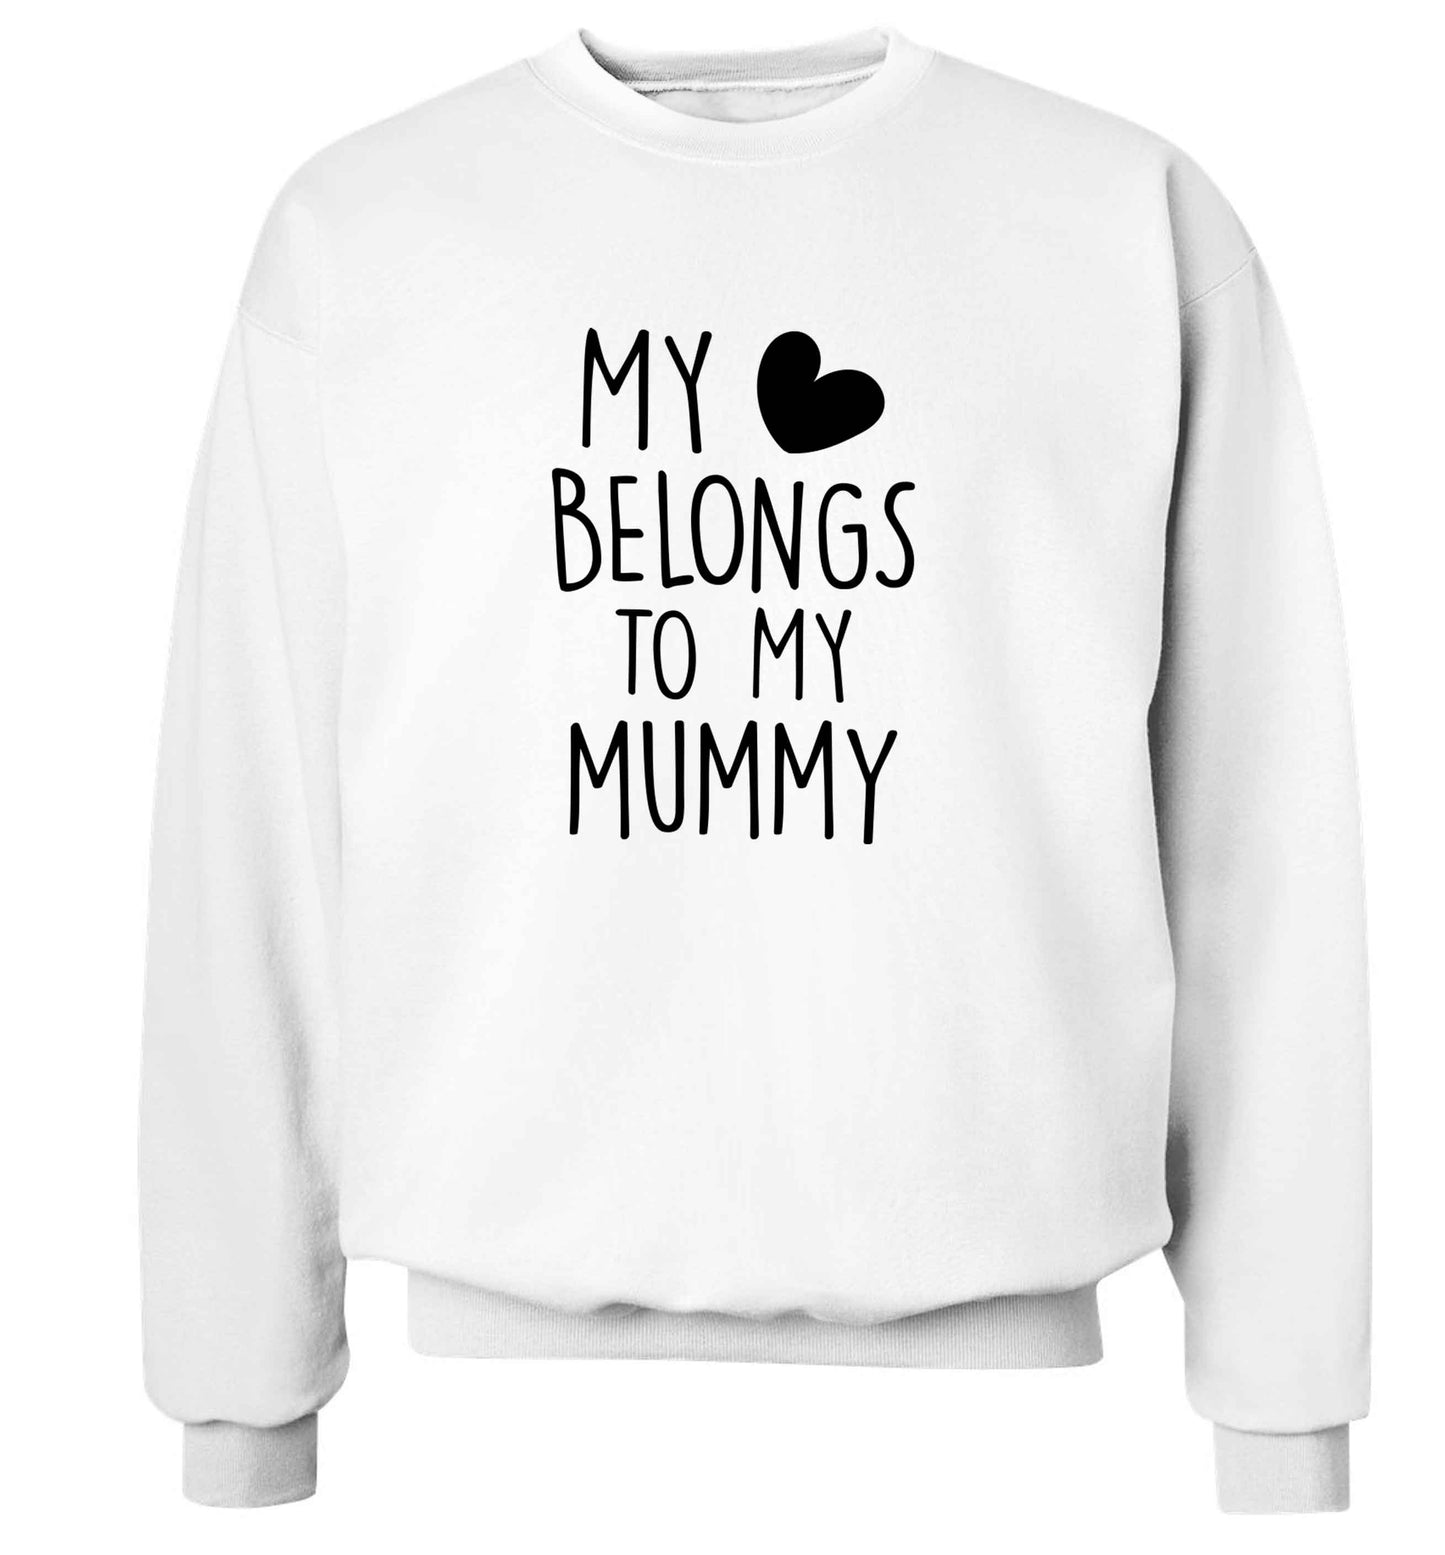 My heart belongs to my mummy adult's unisex white sweater 2XL